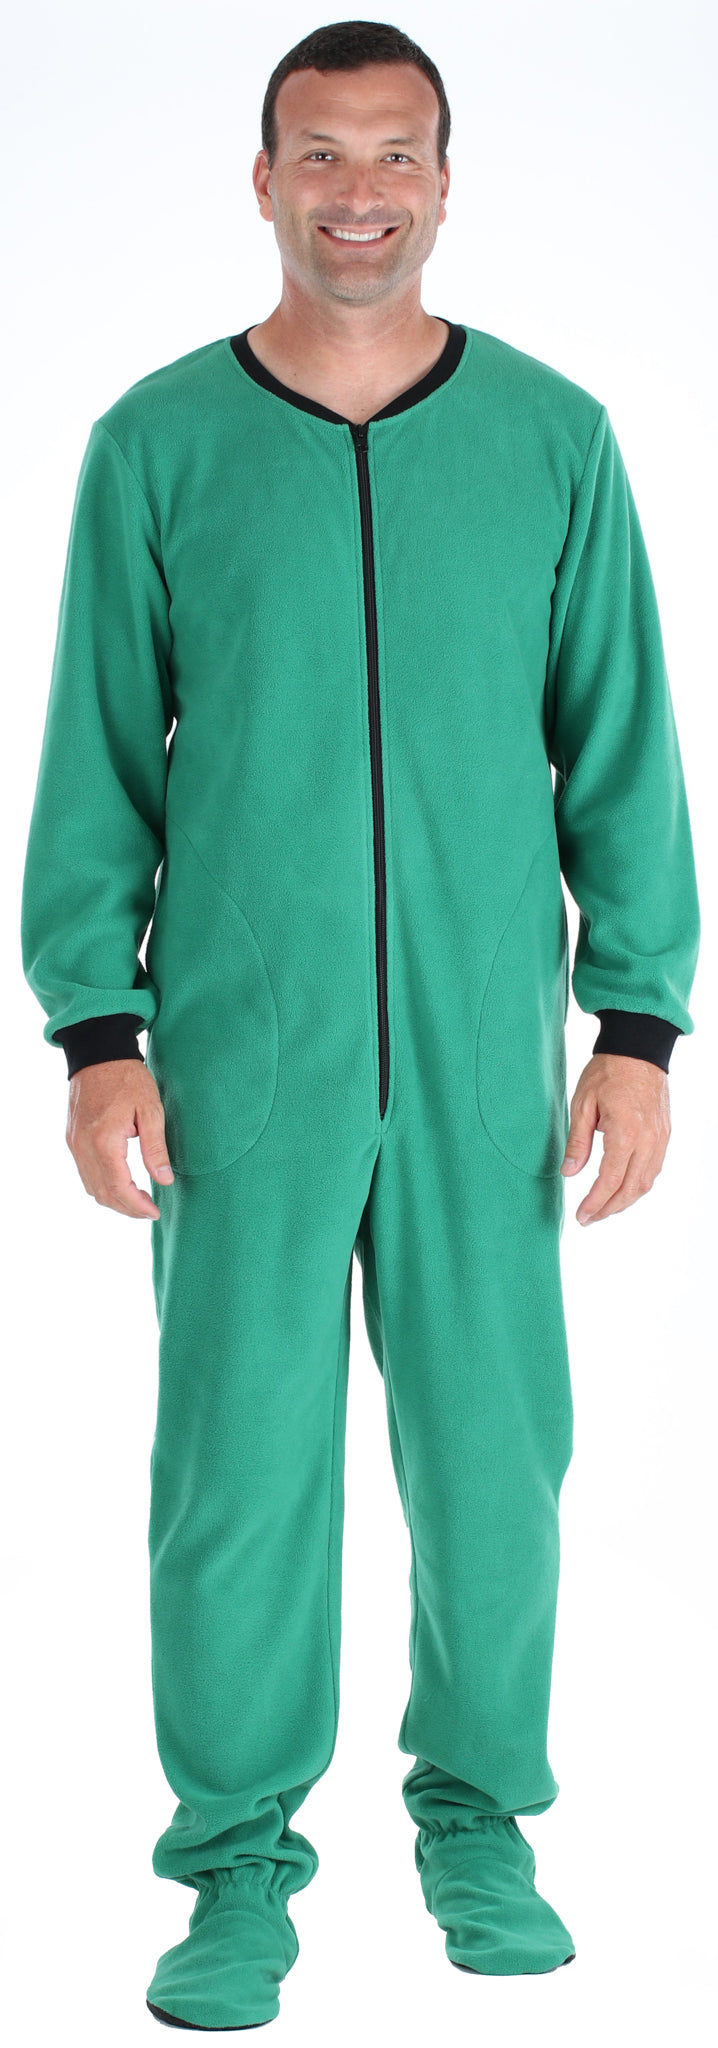 PajamaMania Men’s Fleece Footed Solid Color Onesie Pajamas Jumpsuit